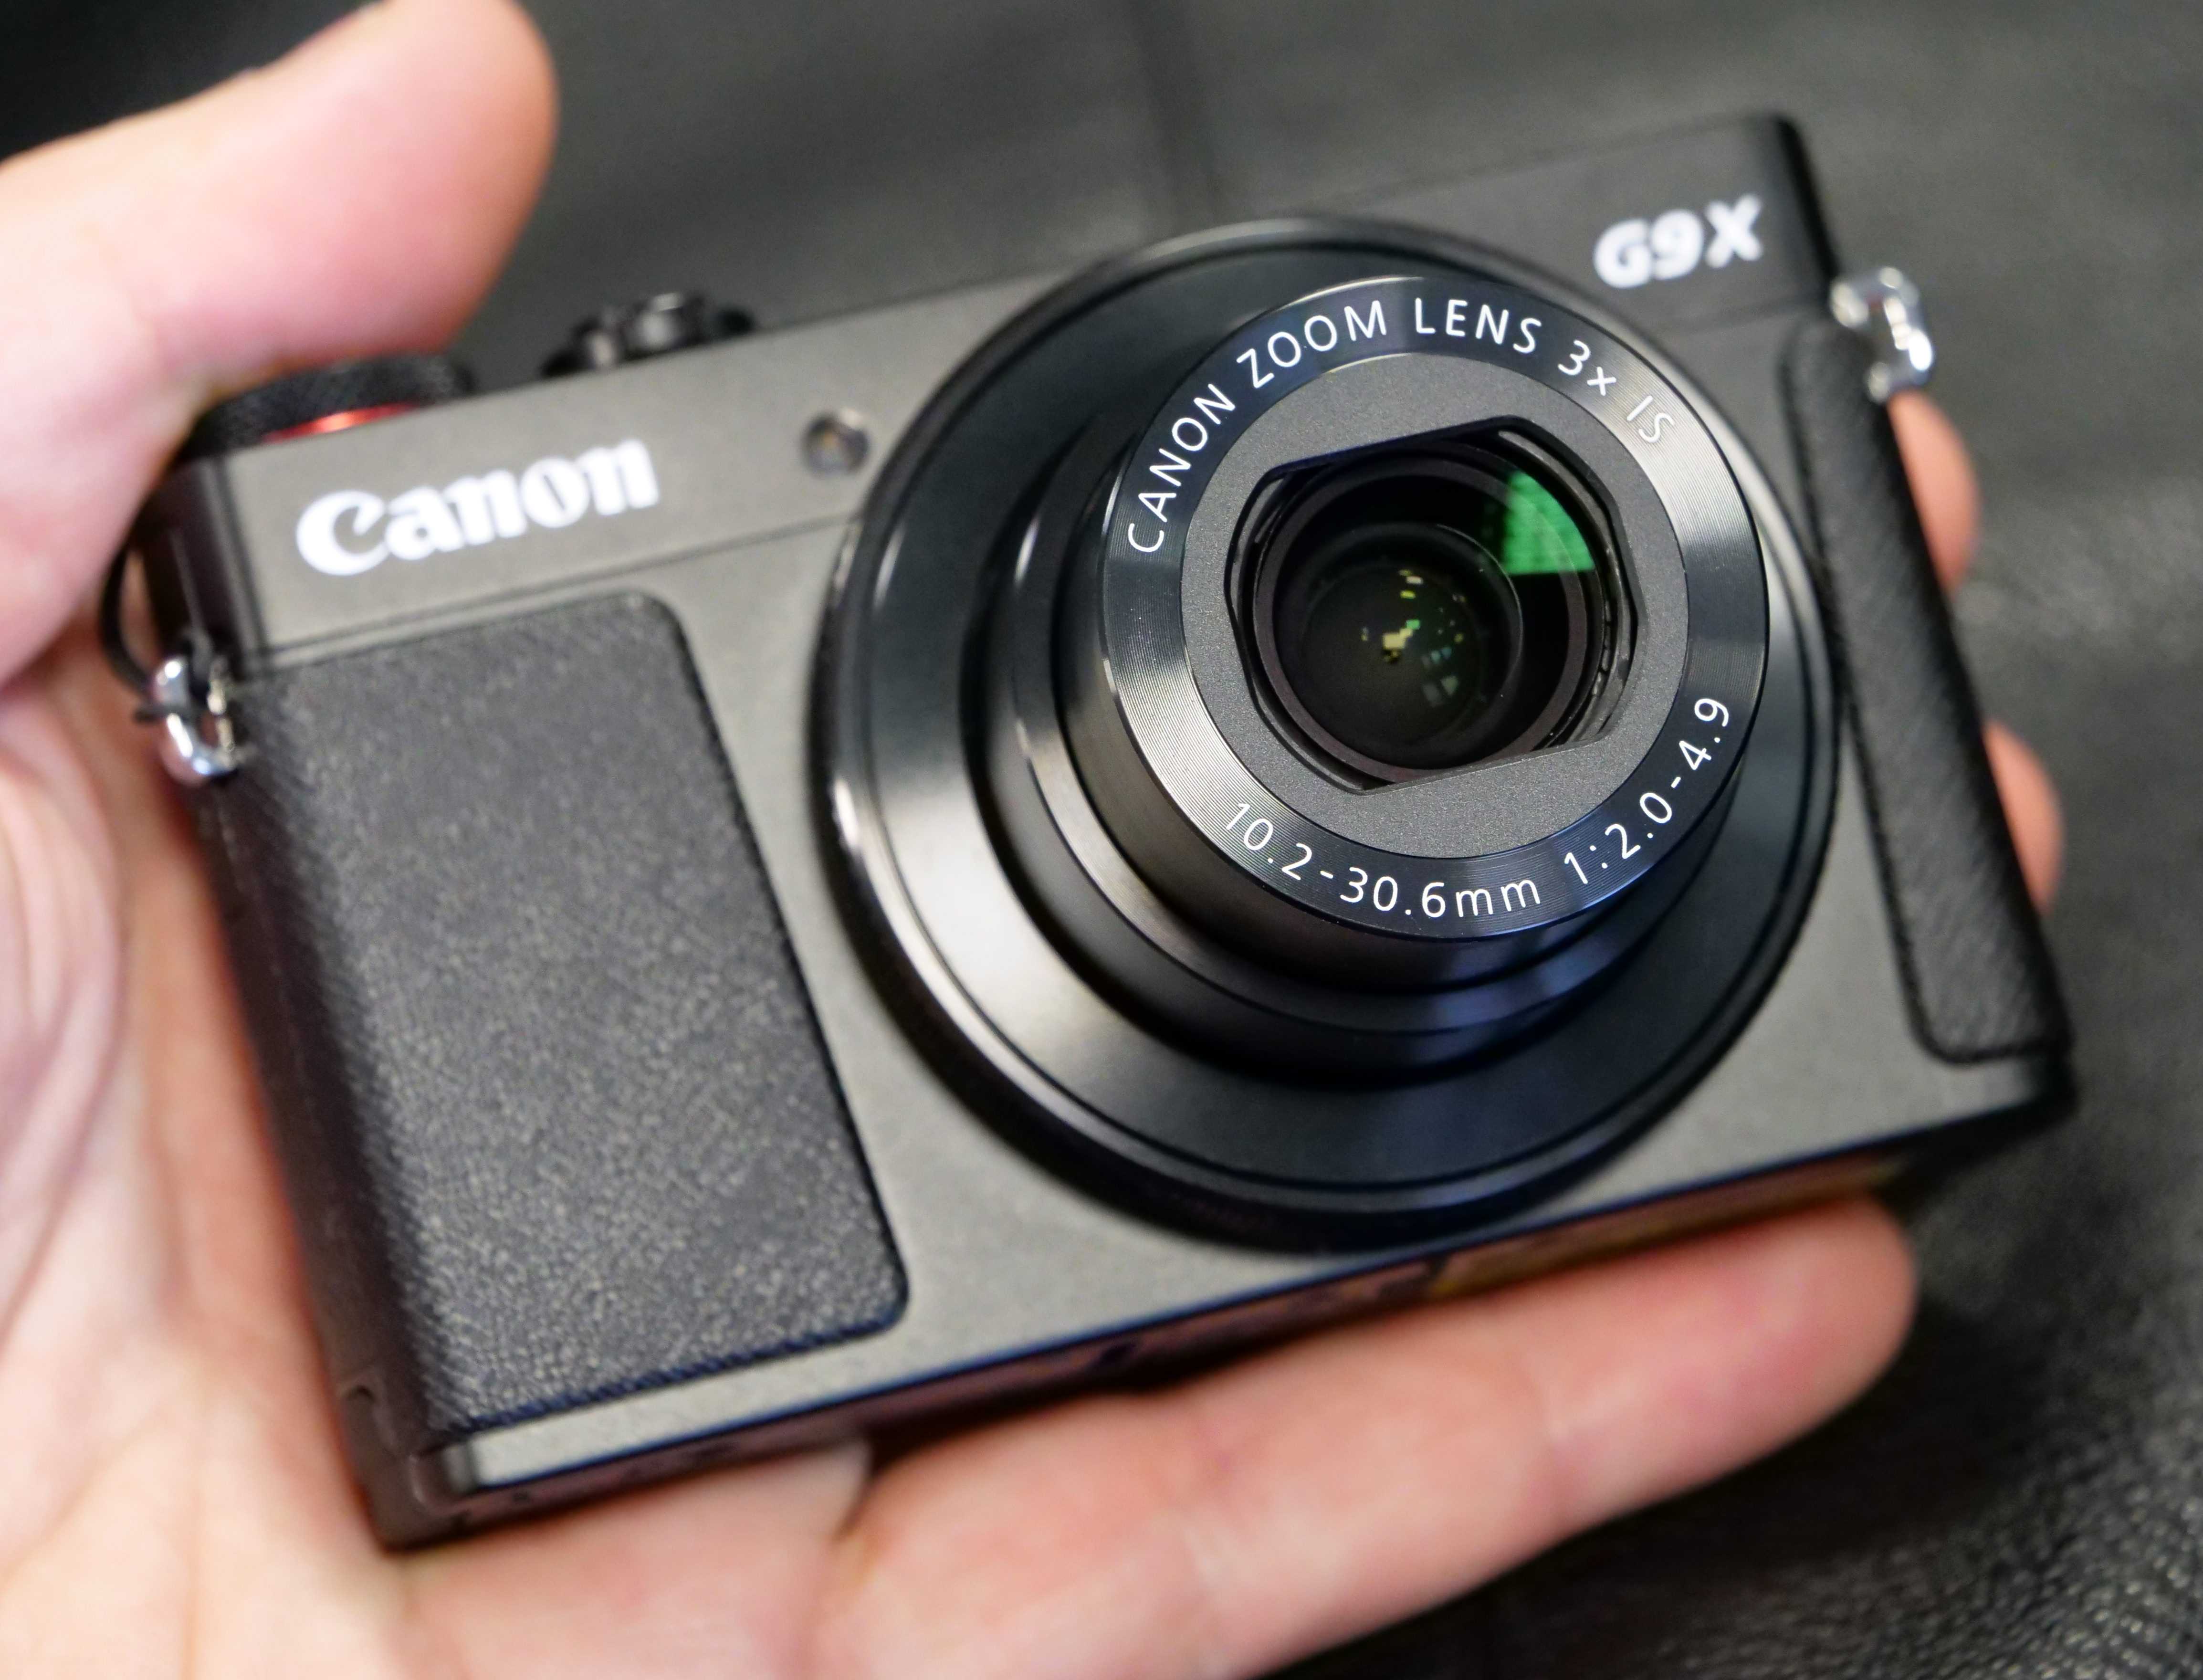 Canon powershot g9 x mark ii review